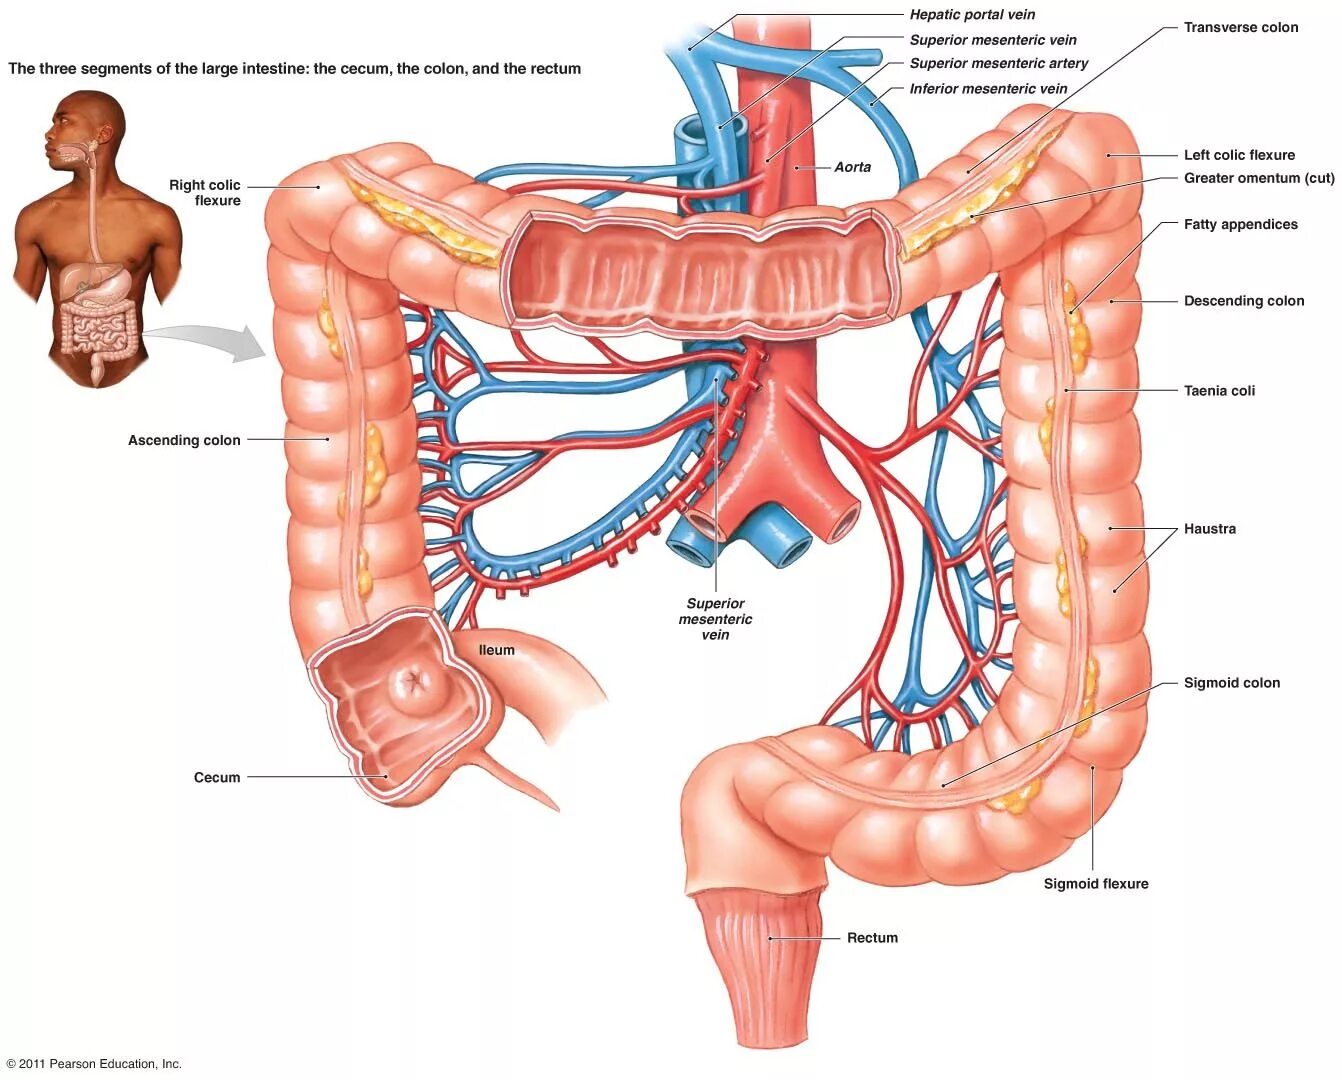 Ободочная толстая кишка анатомия. Анатомия человека кишечник толстая кишка. Анатомия Толстого кишечника человека. Сигмовидная кишка анатомия.